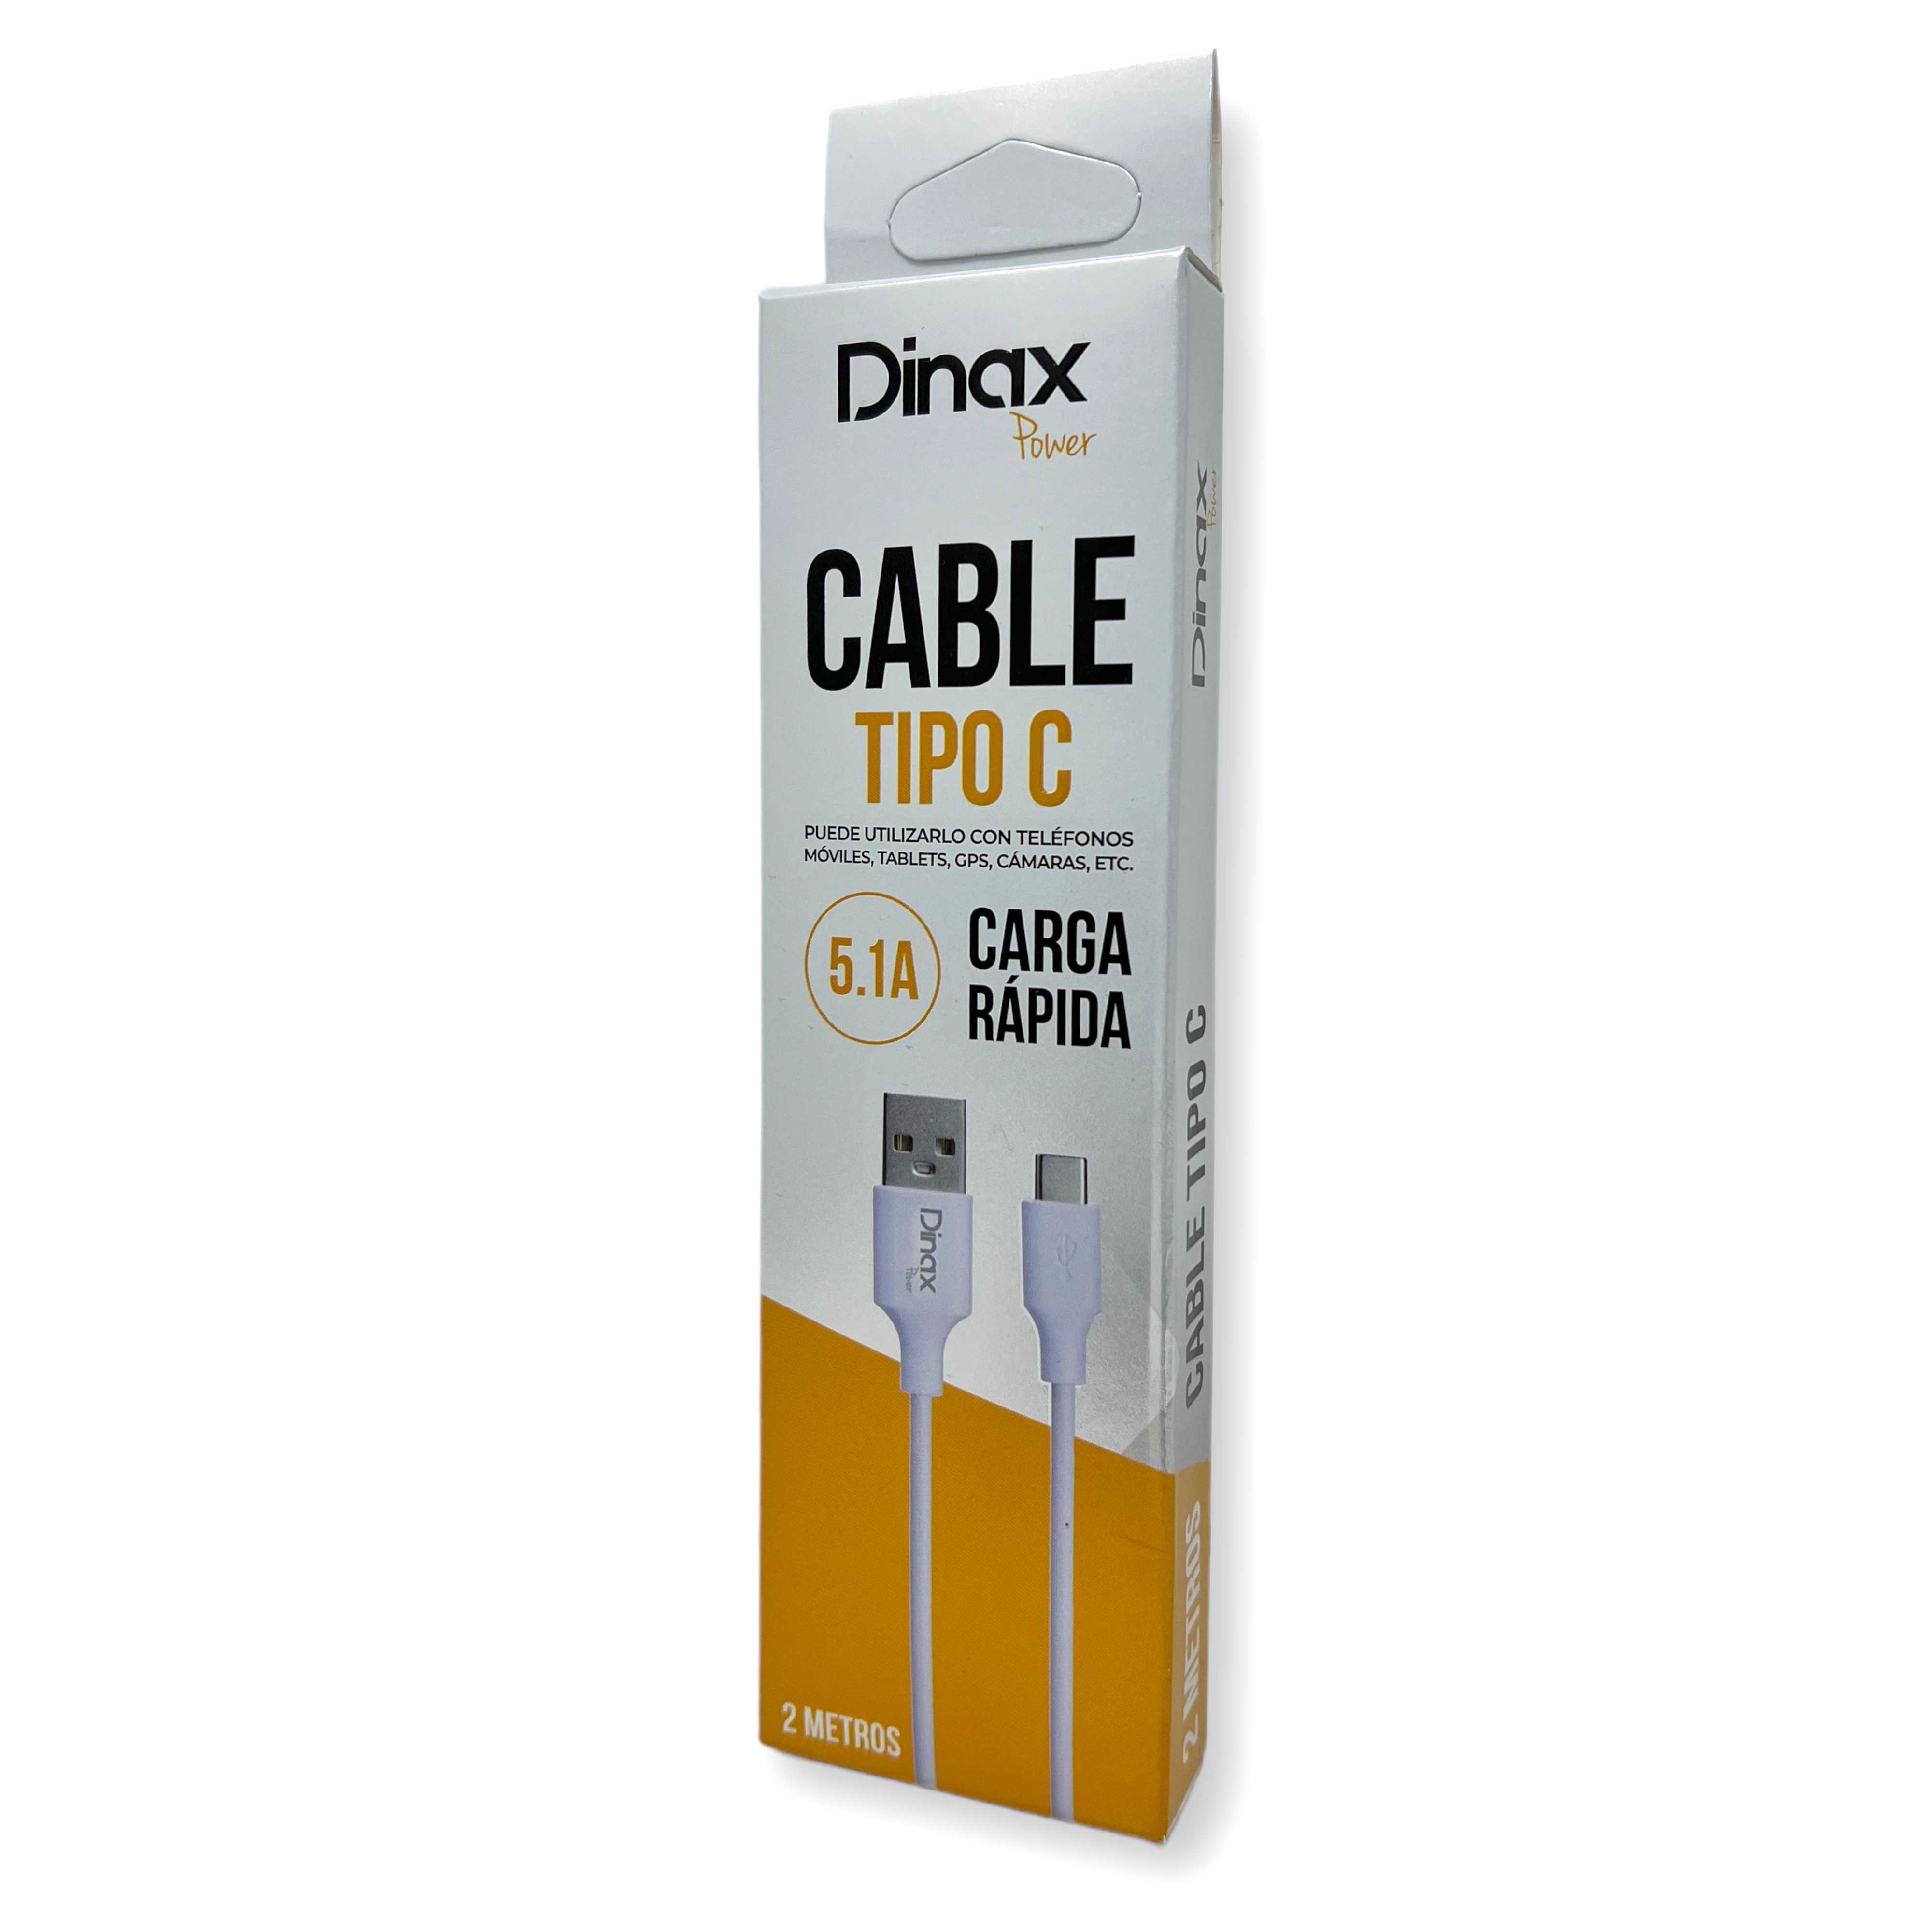 Cable Carga Rápida Para Celular 5.1 muy buena calidad 5.1A